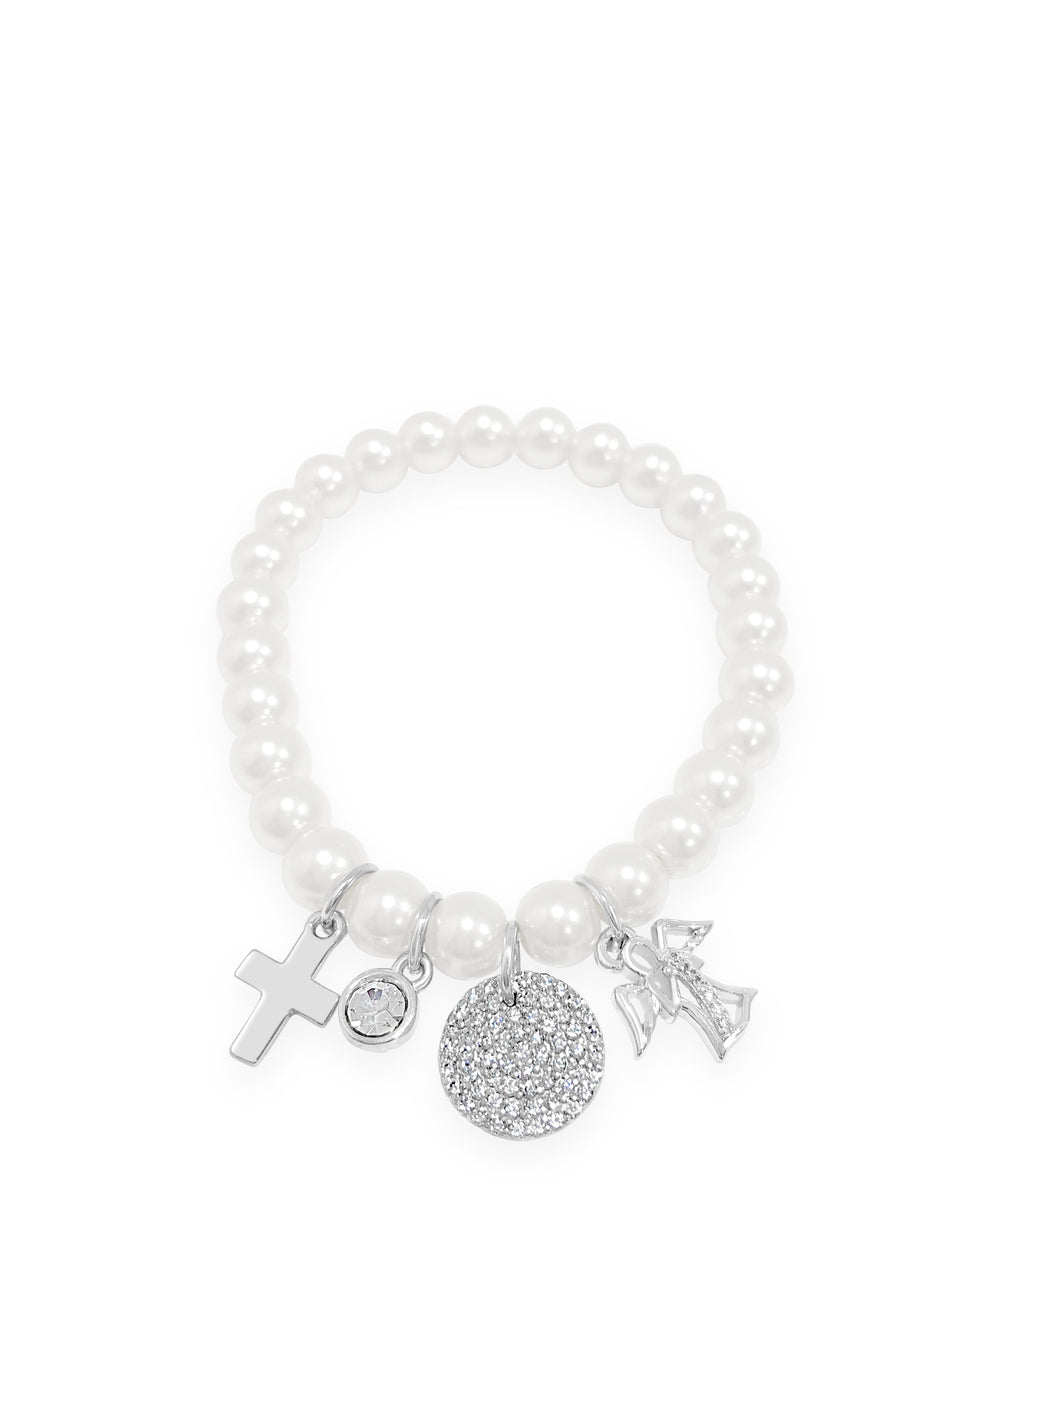 Absolute Jewellery Bracelet HCB305